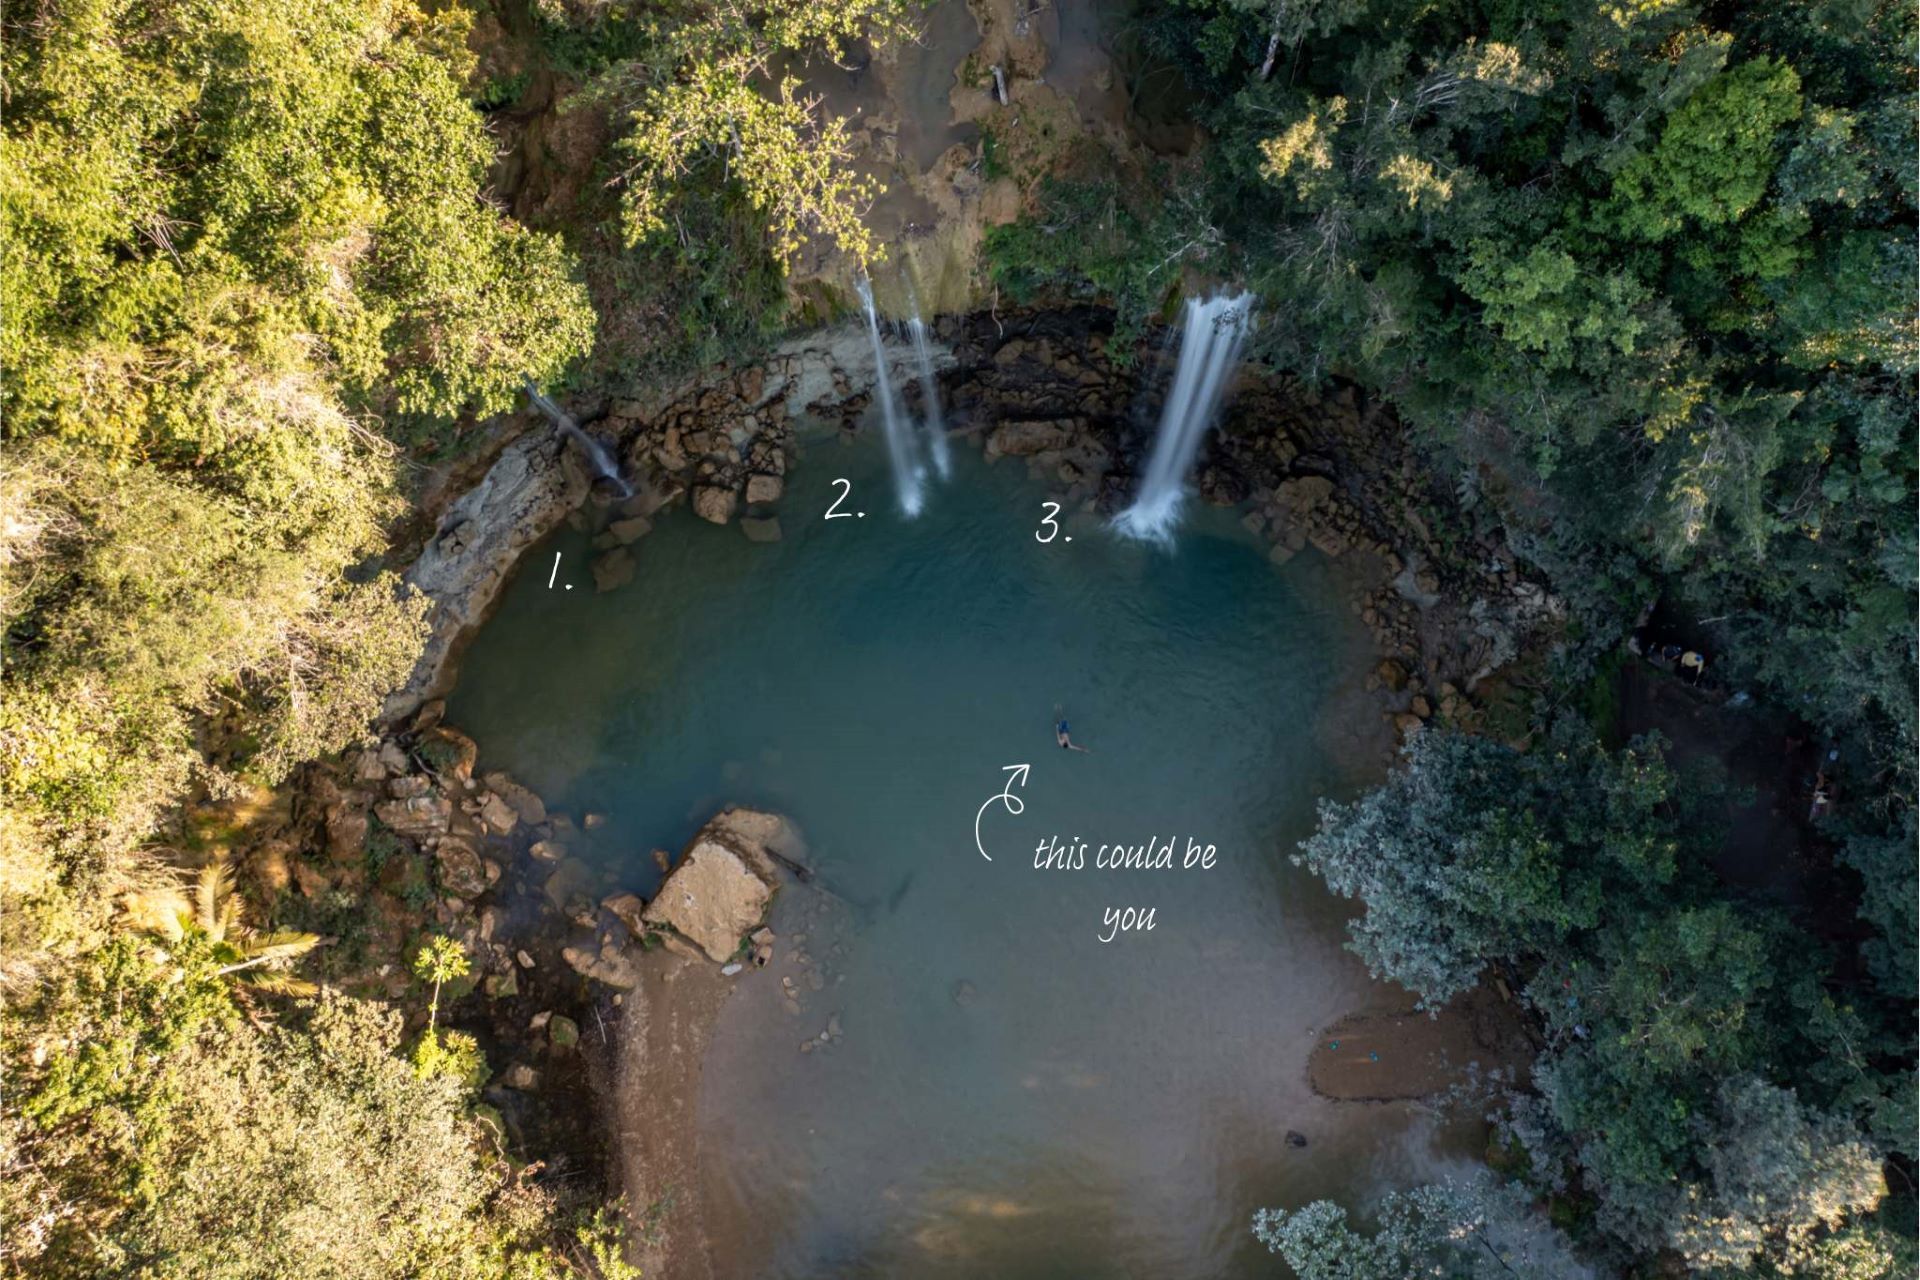 Salto Alto in the Dominican Republic, a pool with three waterfalls descending into it.